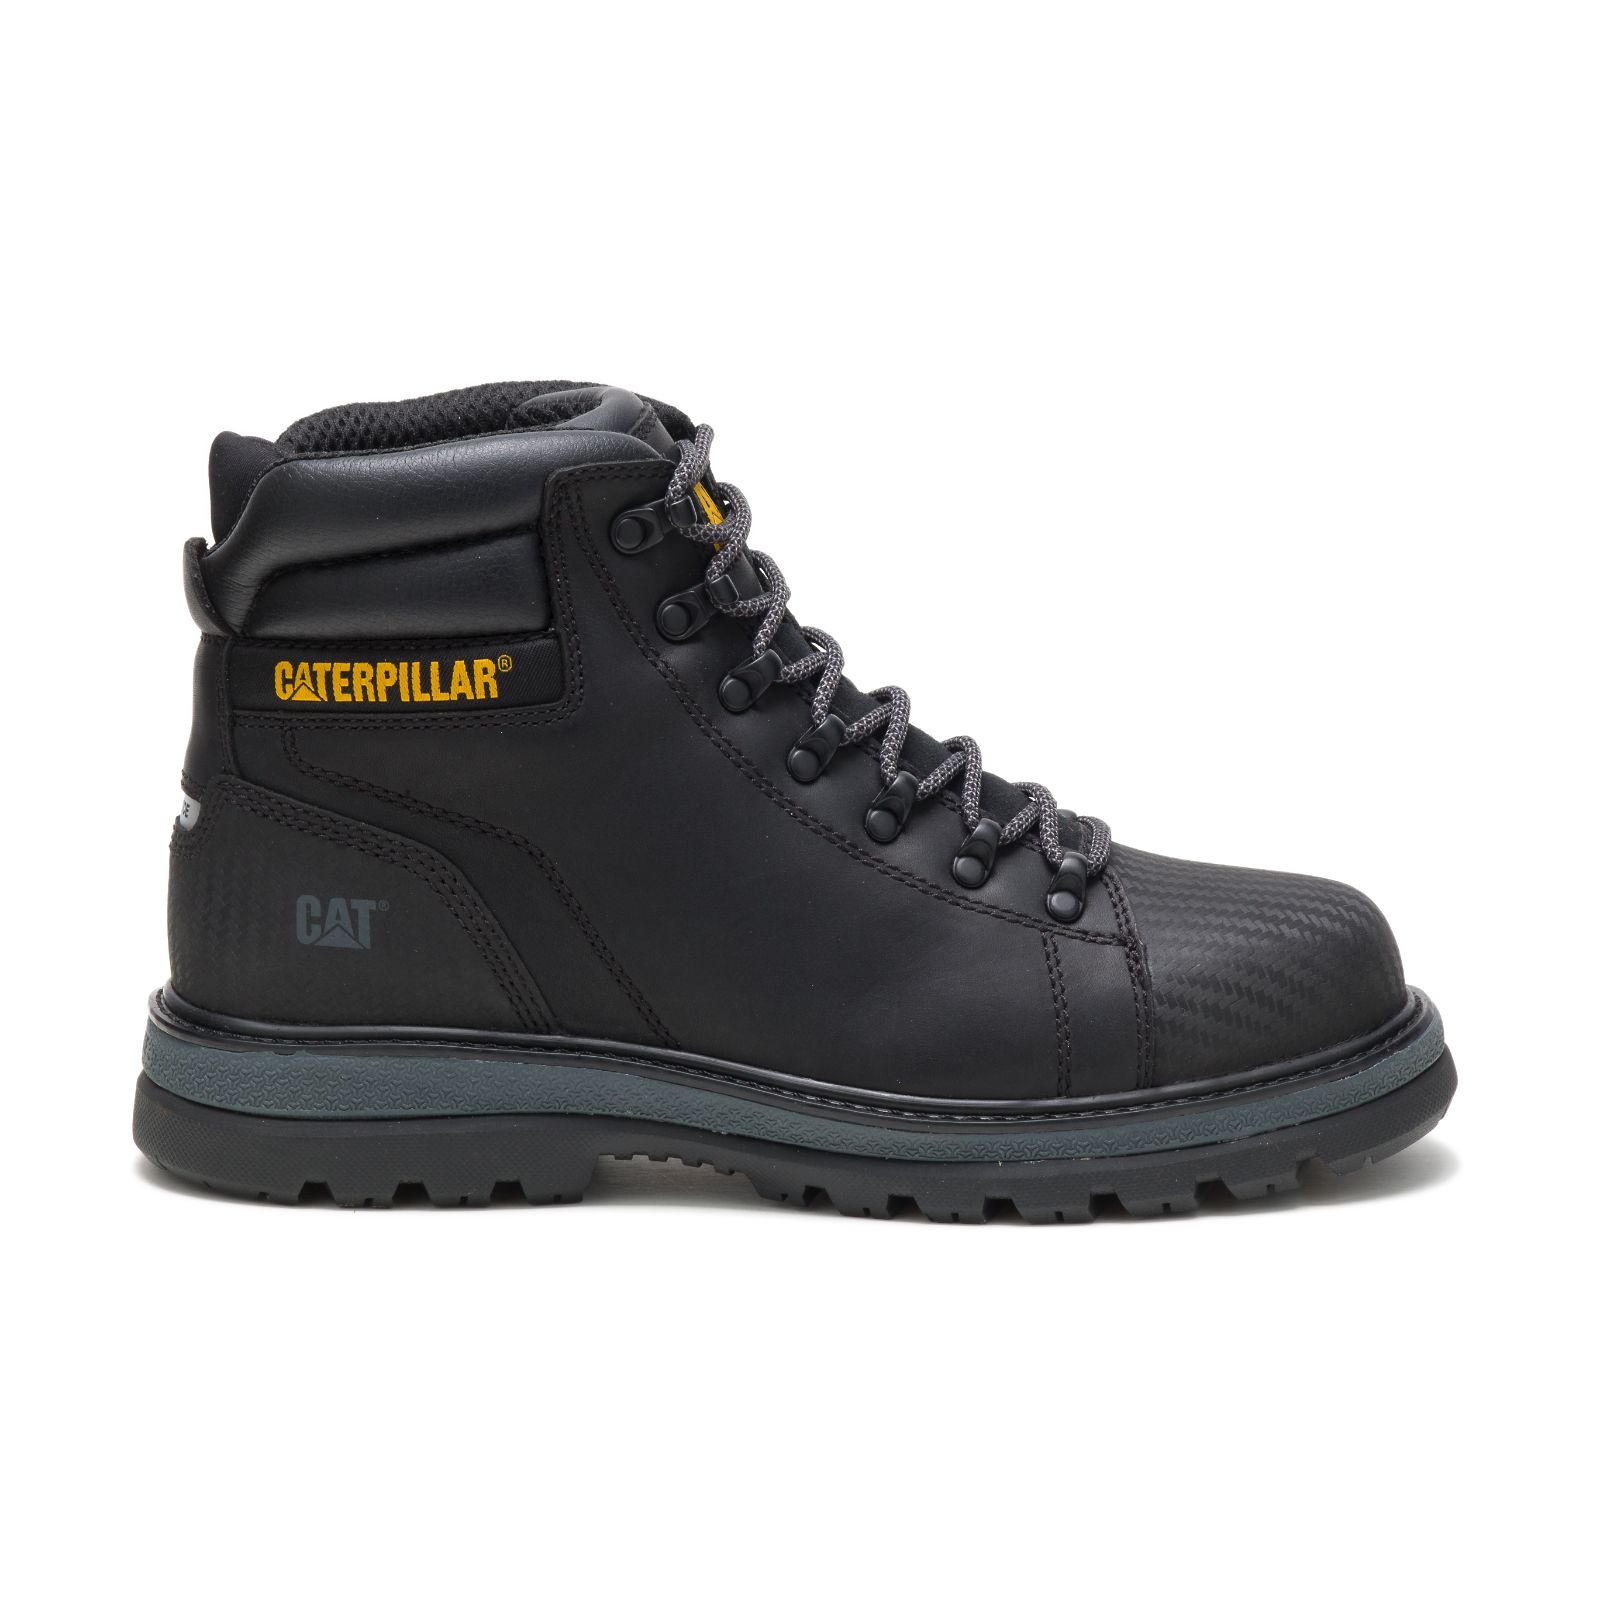 Caterpillar Boots Sale Pakistan - Caterpillar Foxfield Steel Toe Mens Work Boots Black (916437-LUB)